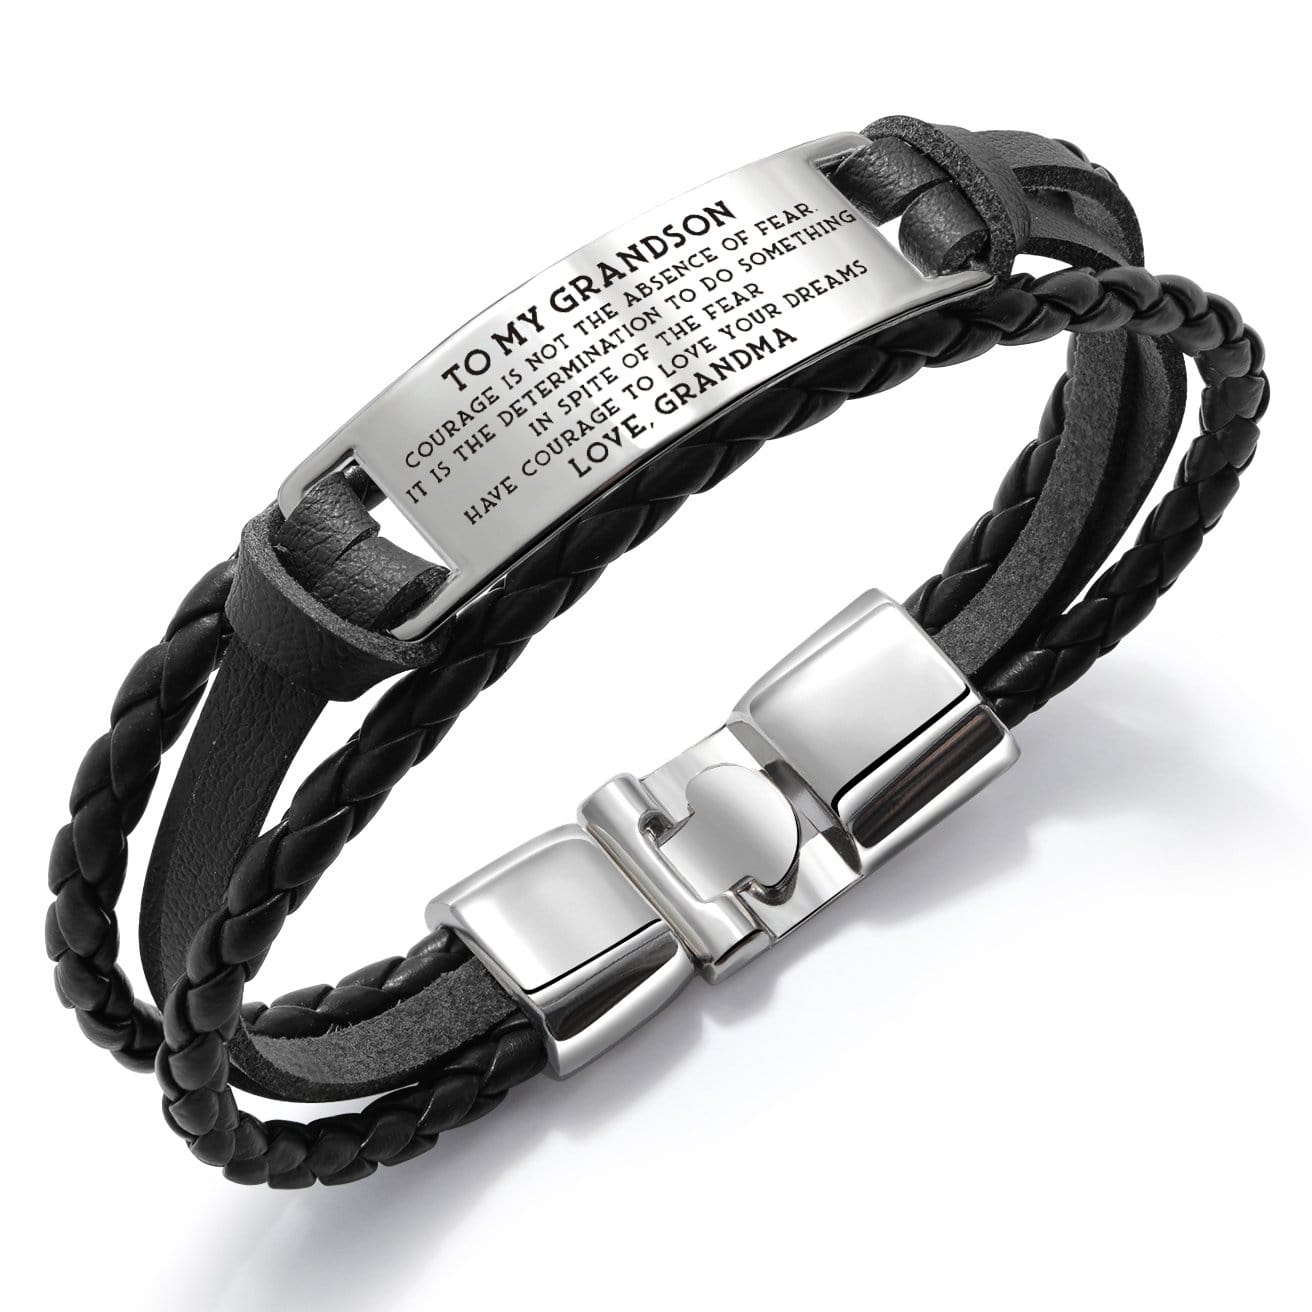 Bracelets Grandma To Grandson - To Love Your Dreams Leather Bracelet Black GiveMe-Gifts